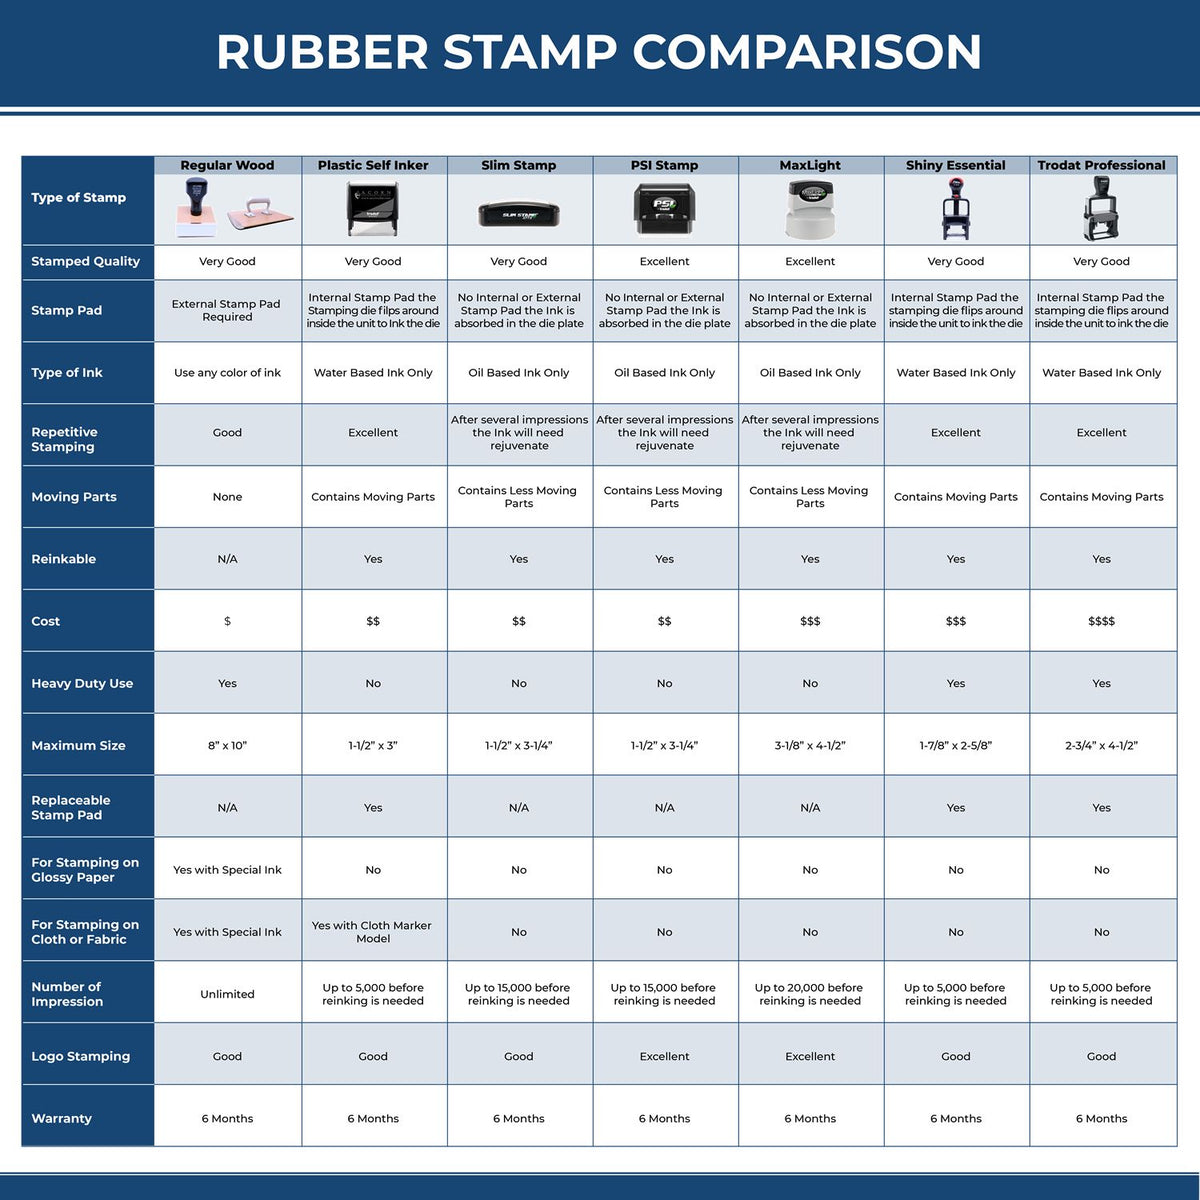 Duplicate Rubber Stamp 4020R Rubber Stamp Comparison